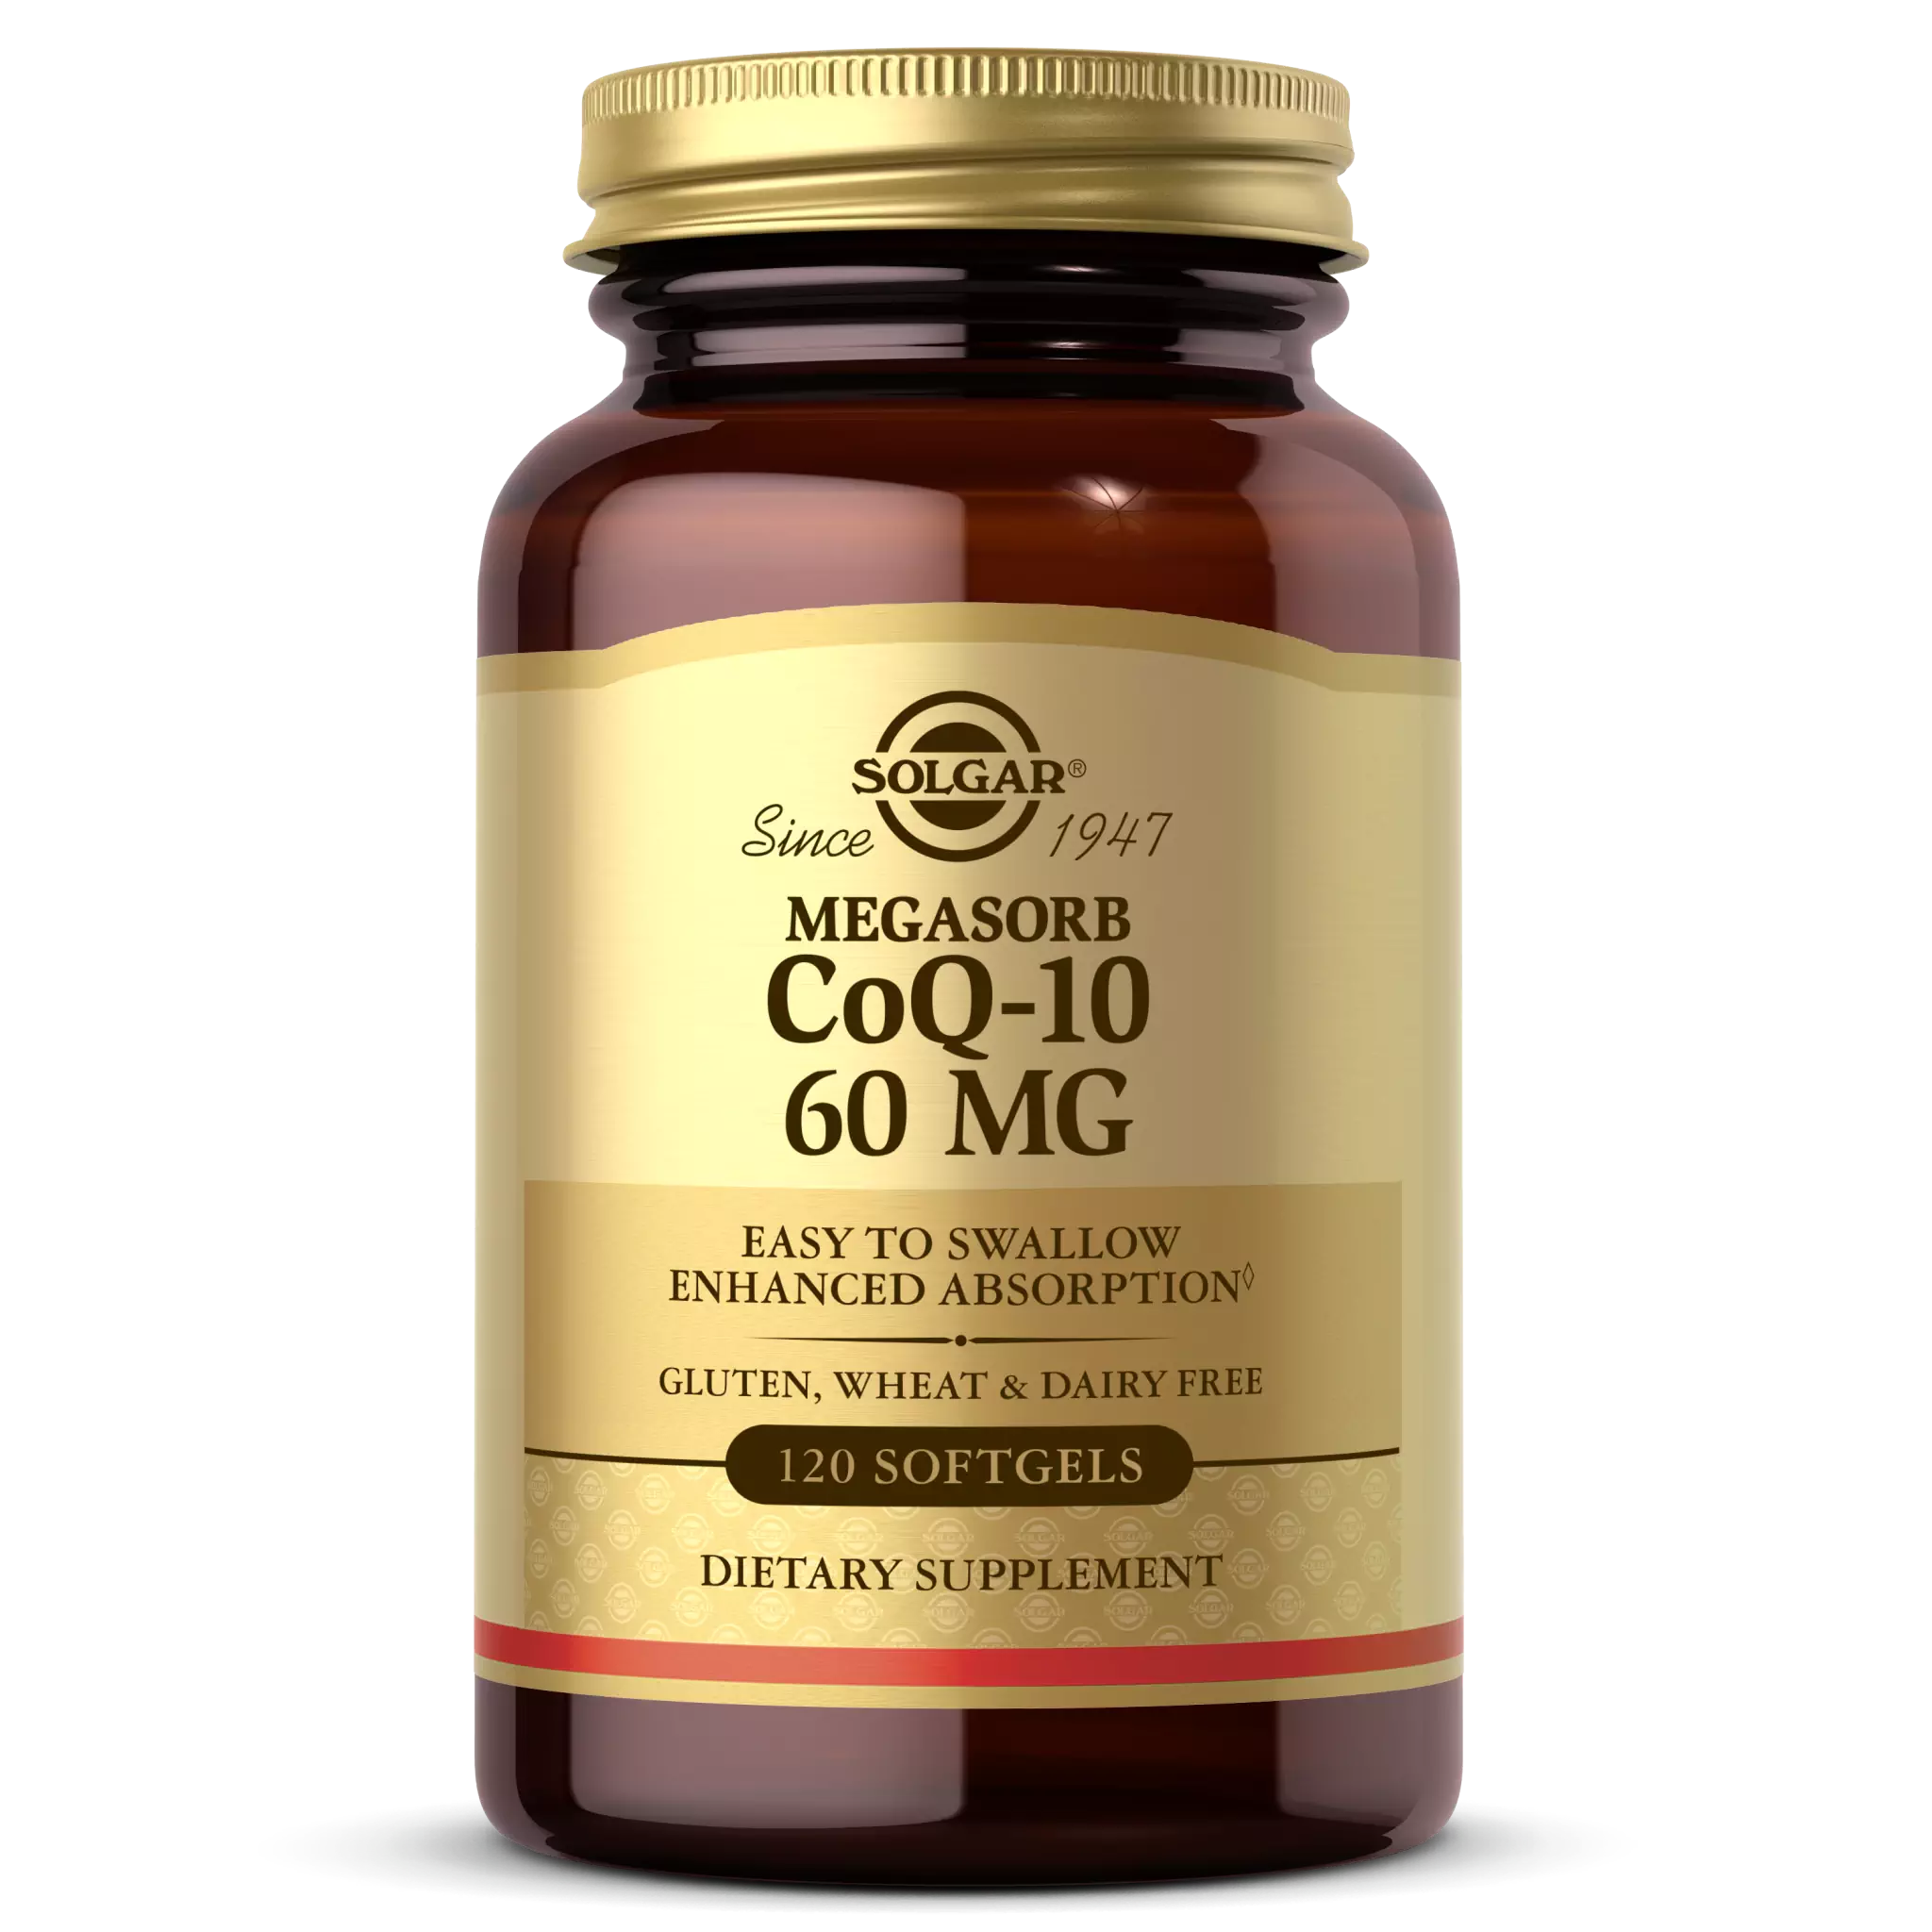 Solgar - Coq10 60 mg softgel